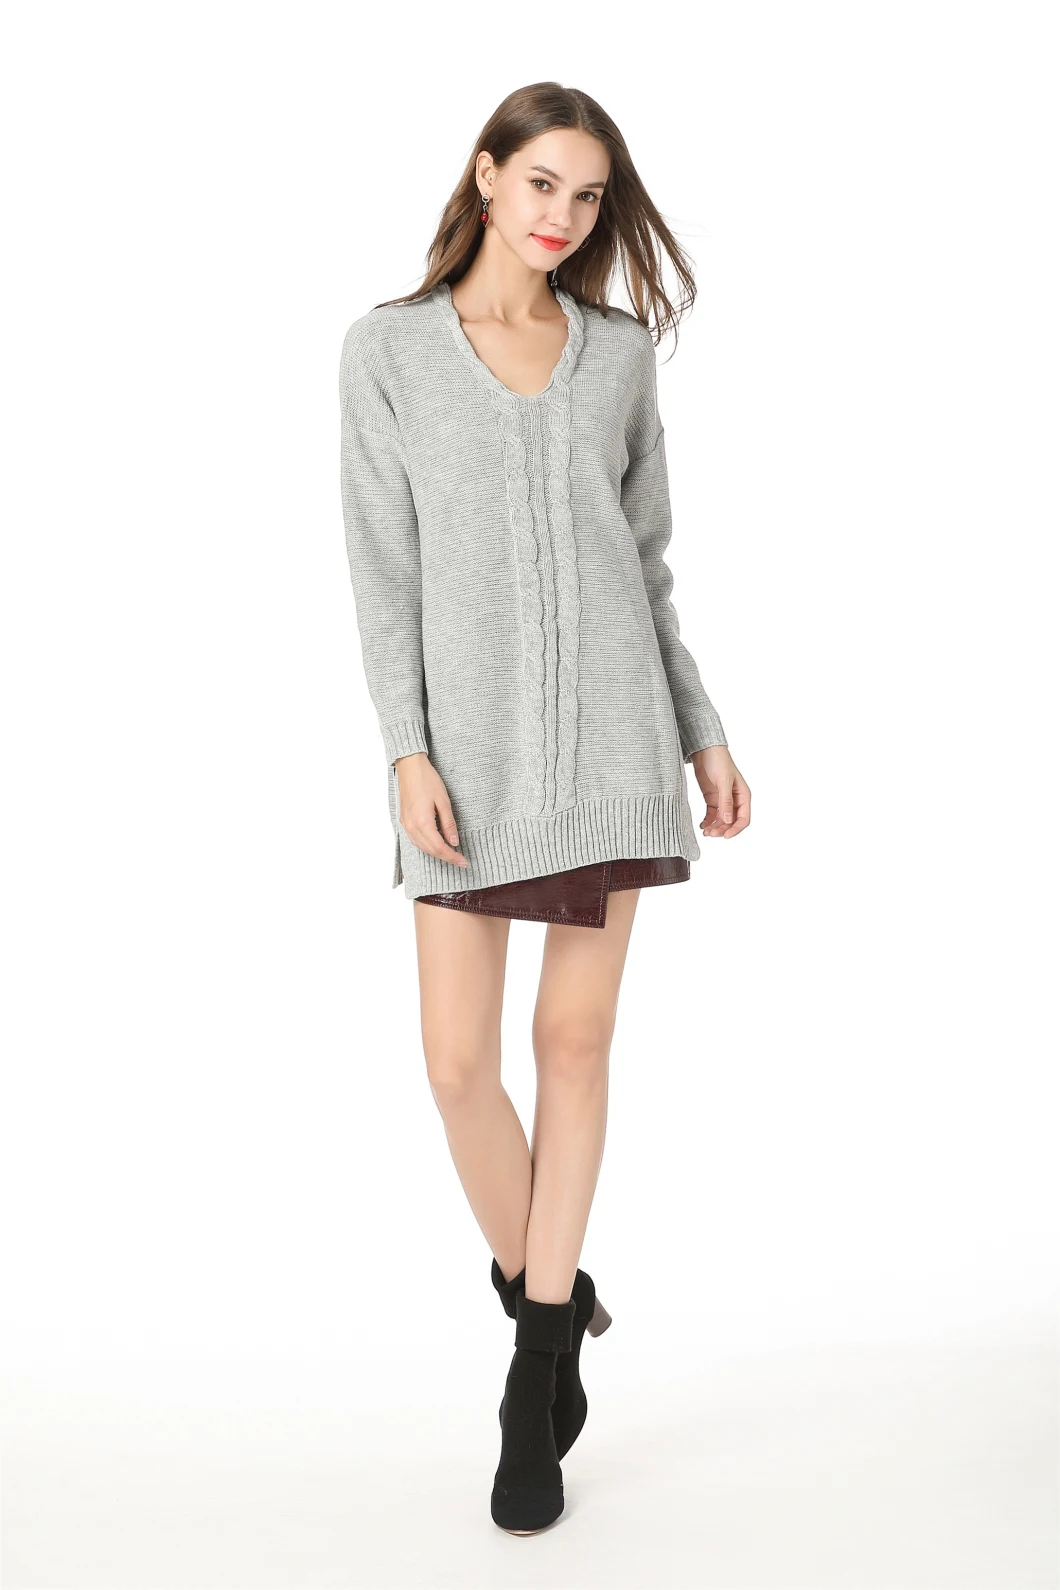 V-Neck Mid-Length Knitwear Over Saiz Pakaian Wanita Pullover Sweater